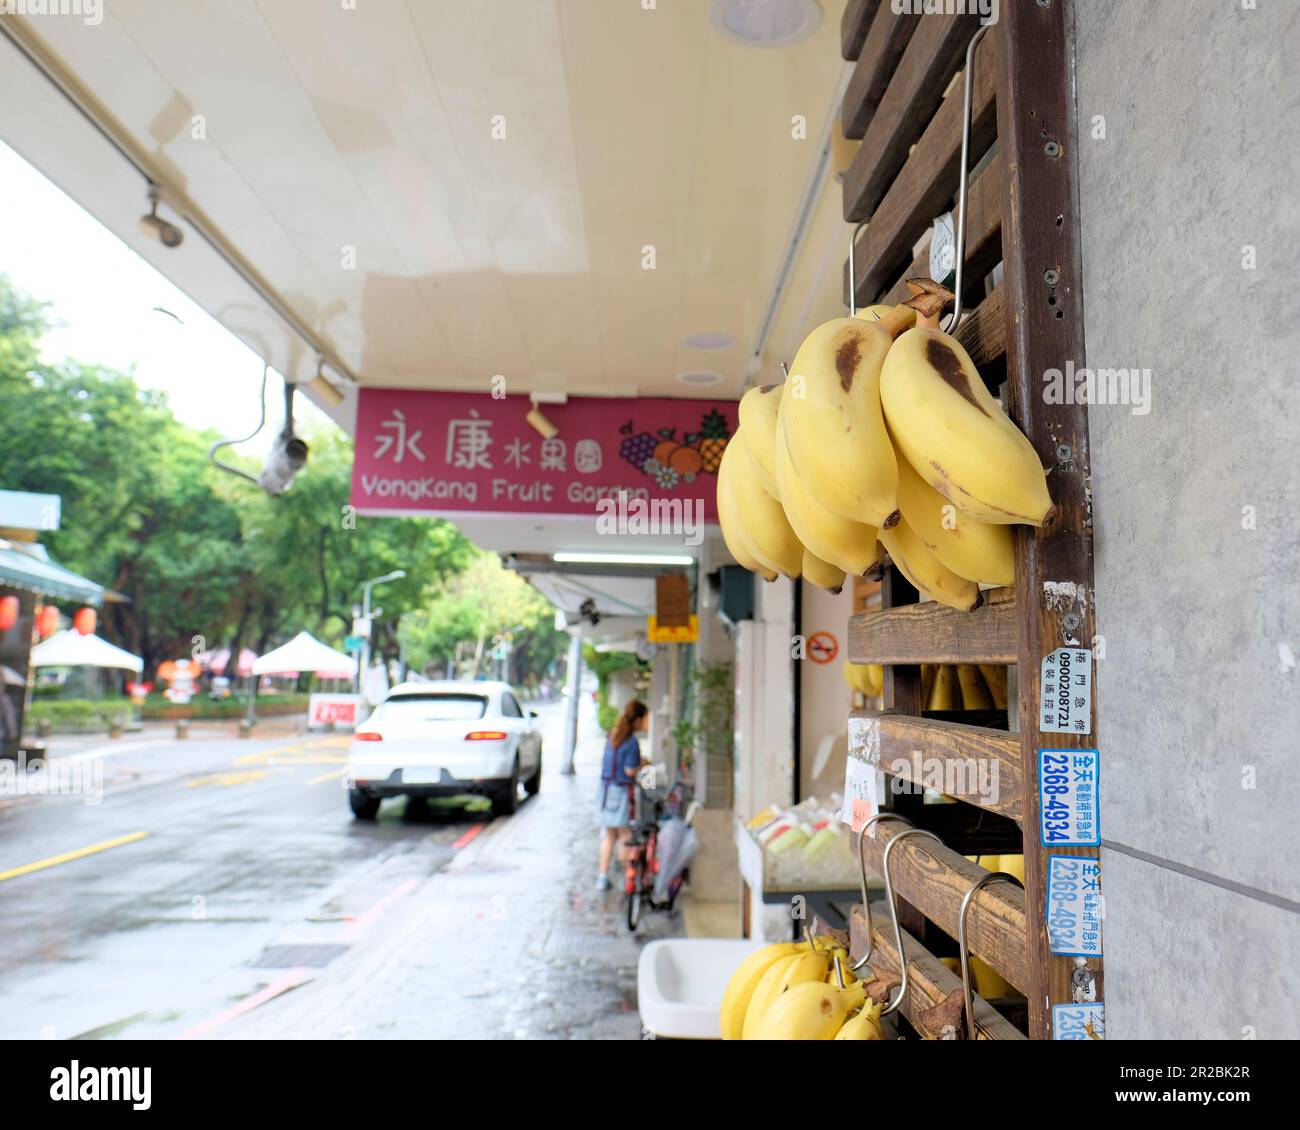 Ripe bananas hanging outside the Yong Kang Fruit Garden store selling fruits and vegetables on Yongkang Street; Da'an District, Taipei, Taiwan. Stock Photo